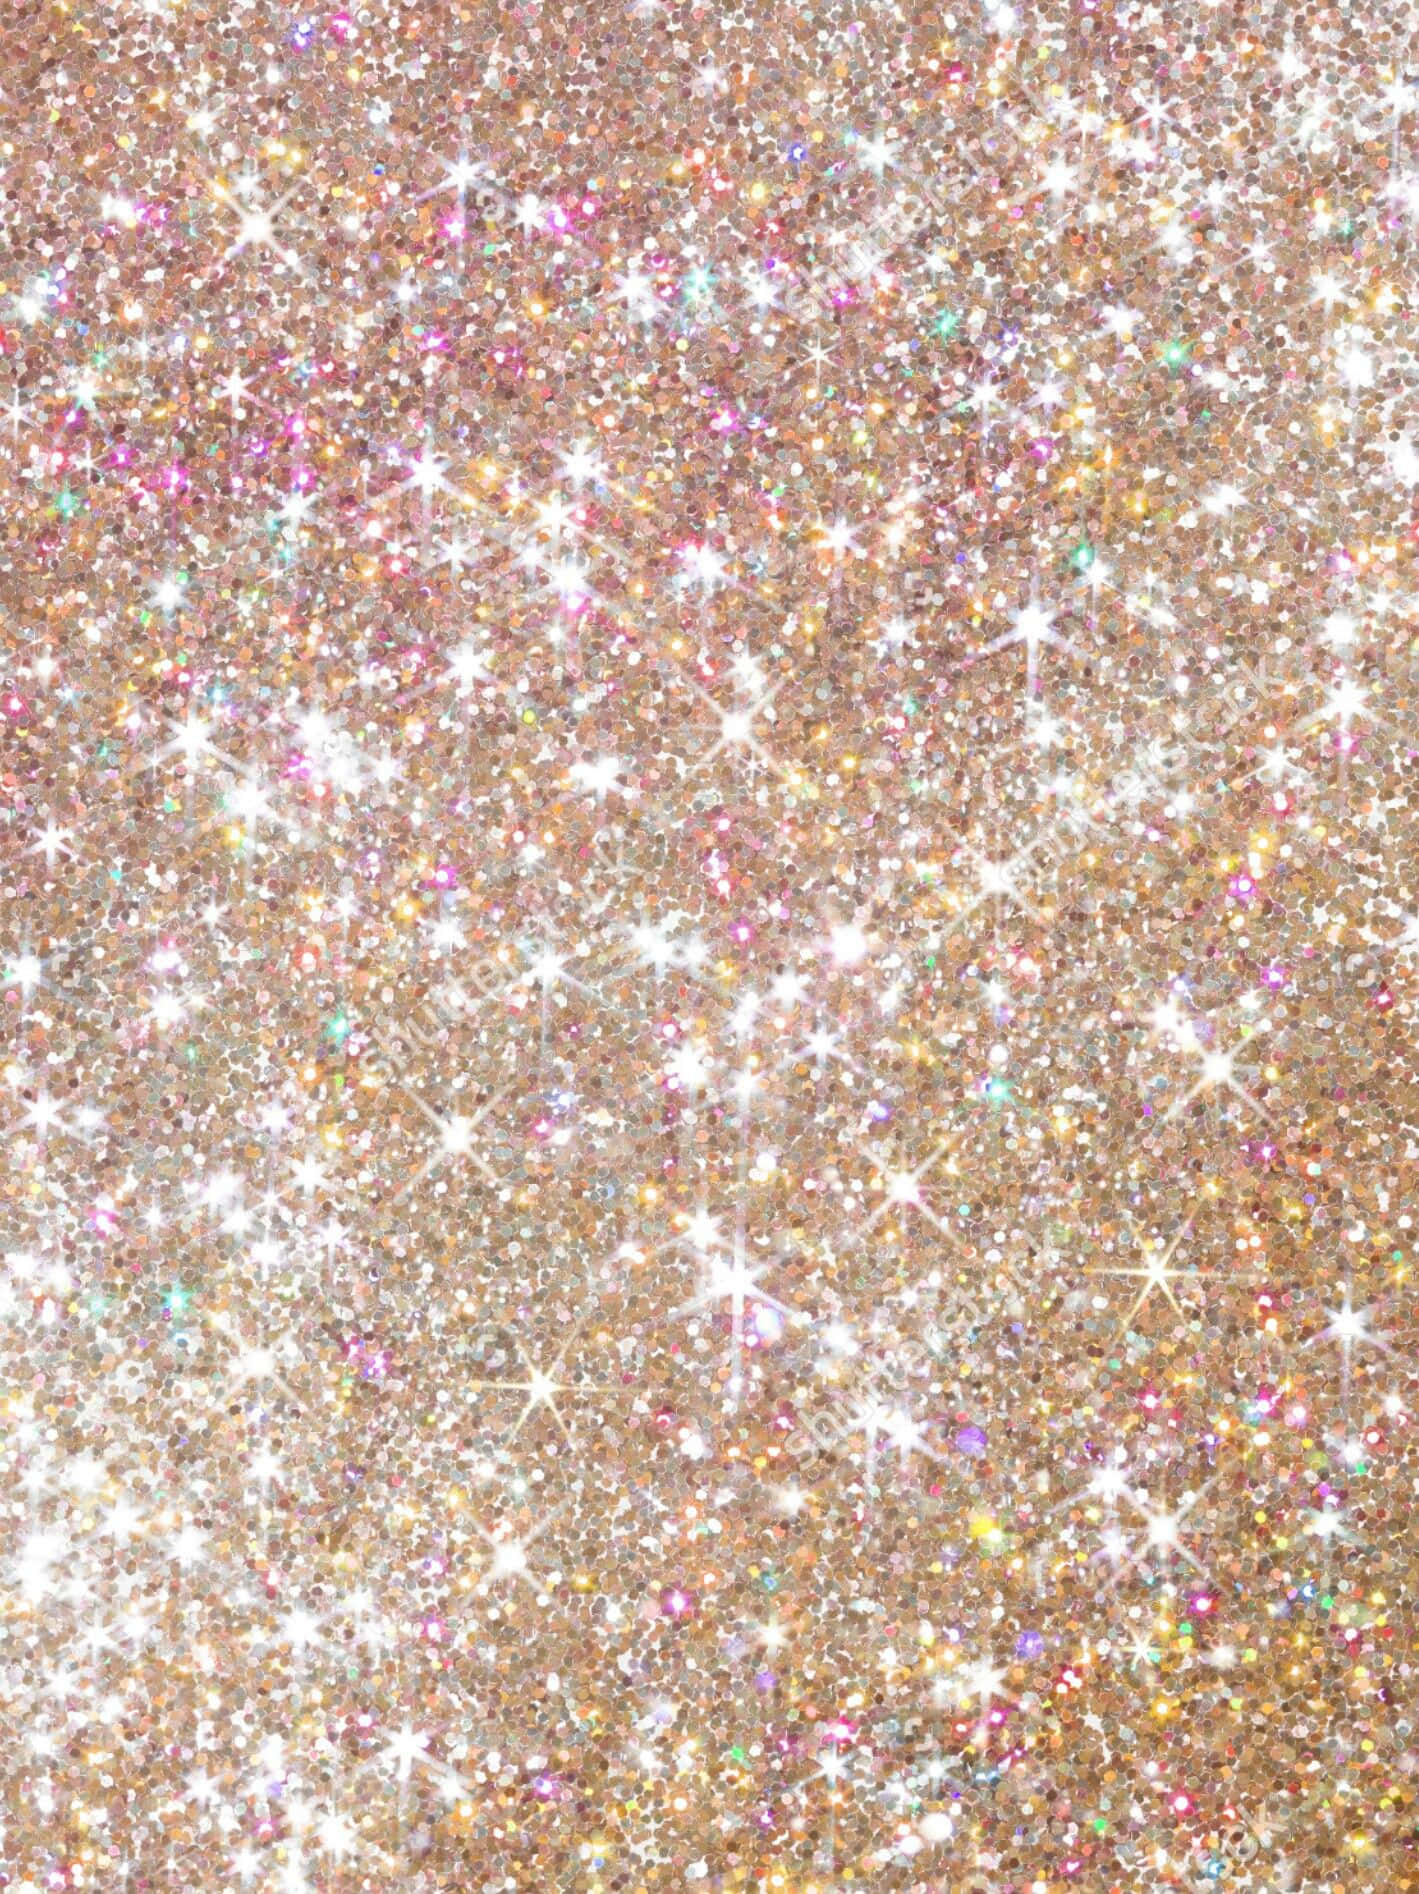 Glittery sparkles brighten up this background